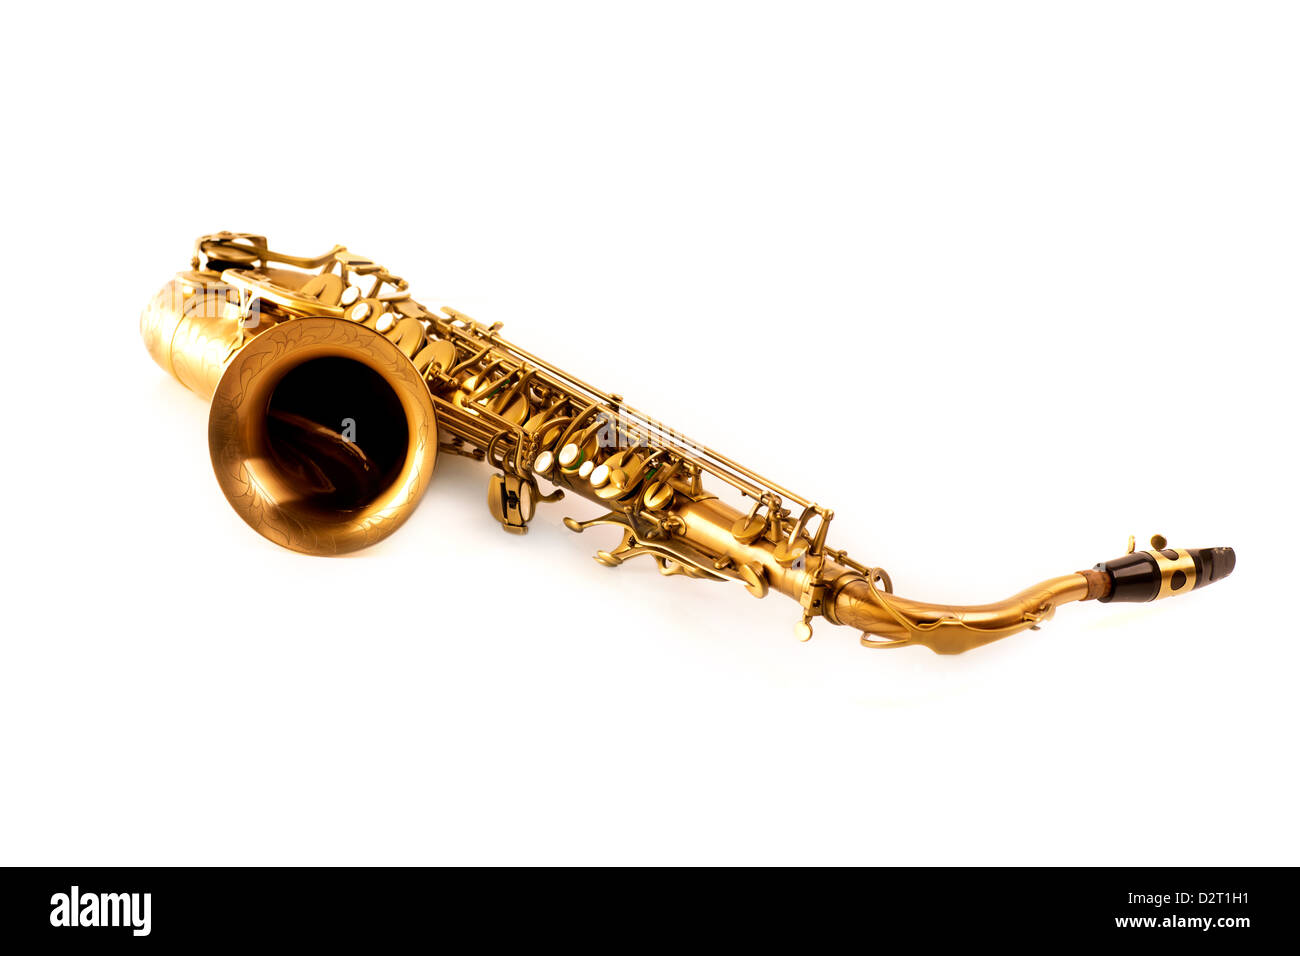 Tenor sax golden saxophone isolated on white background Stock Photo